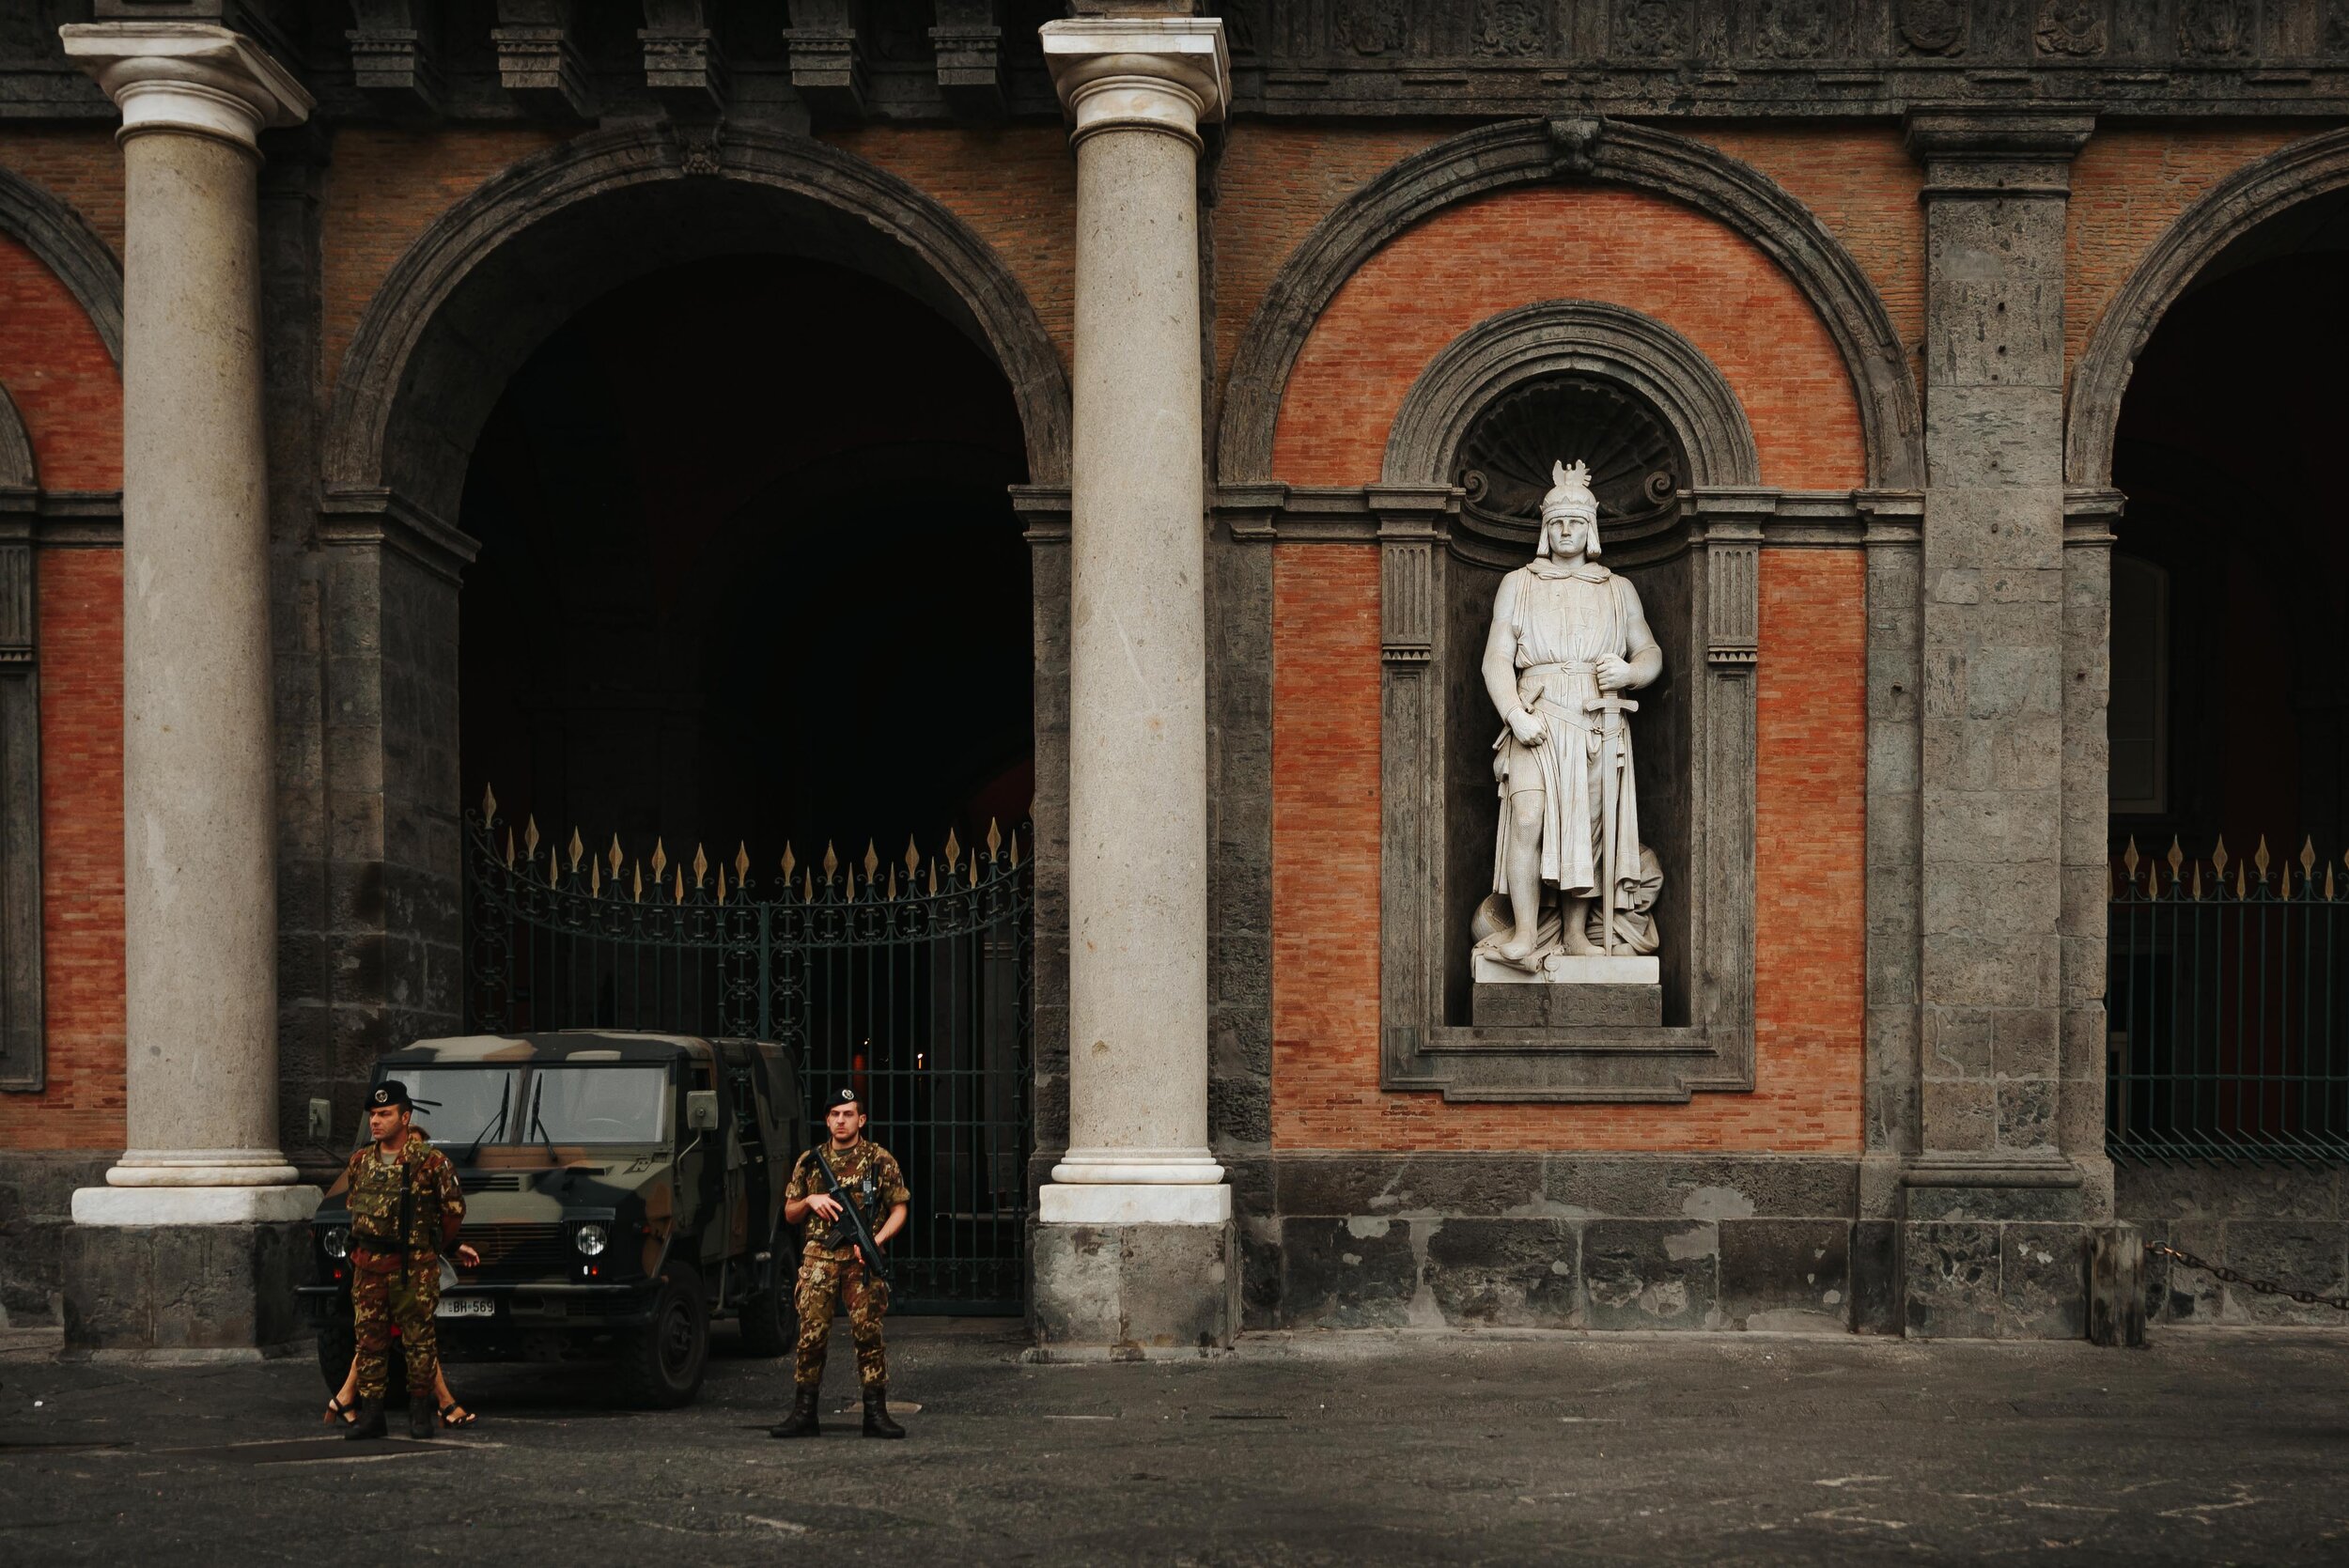  Three men stand guard - Royal Palace. Naples, Italy 